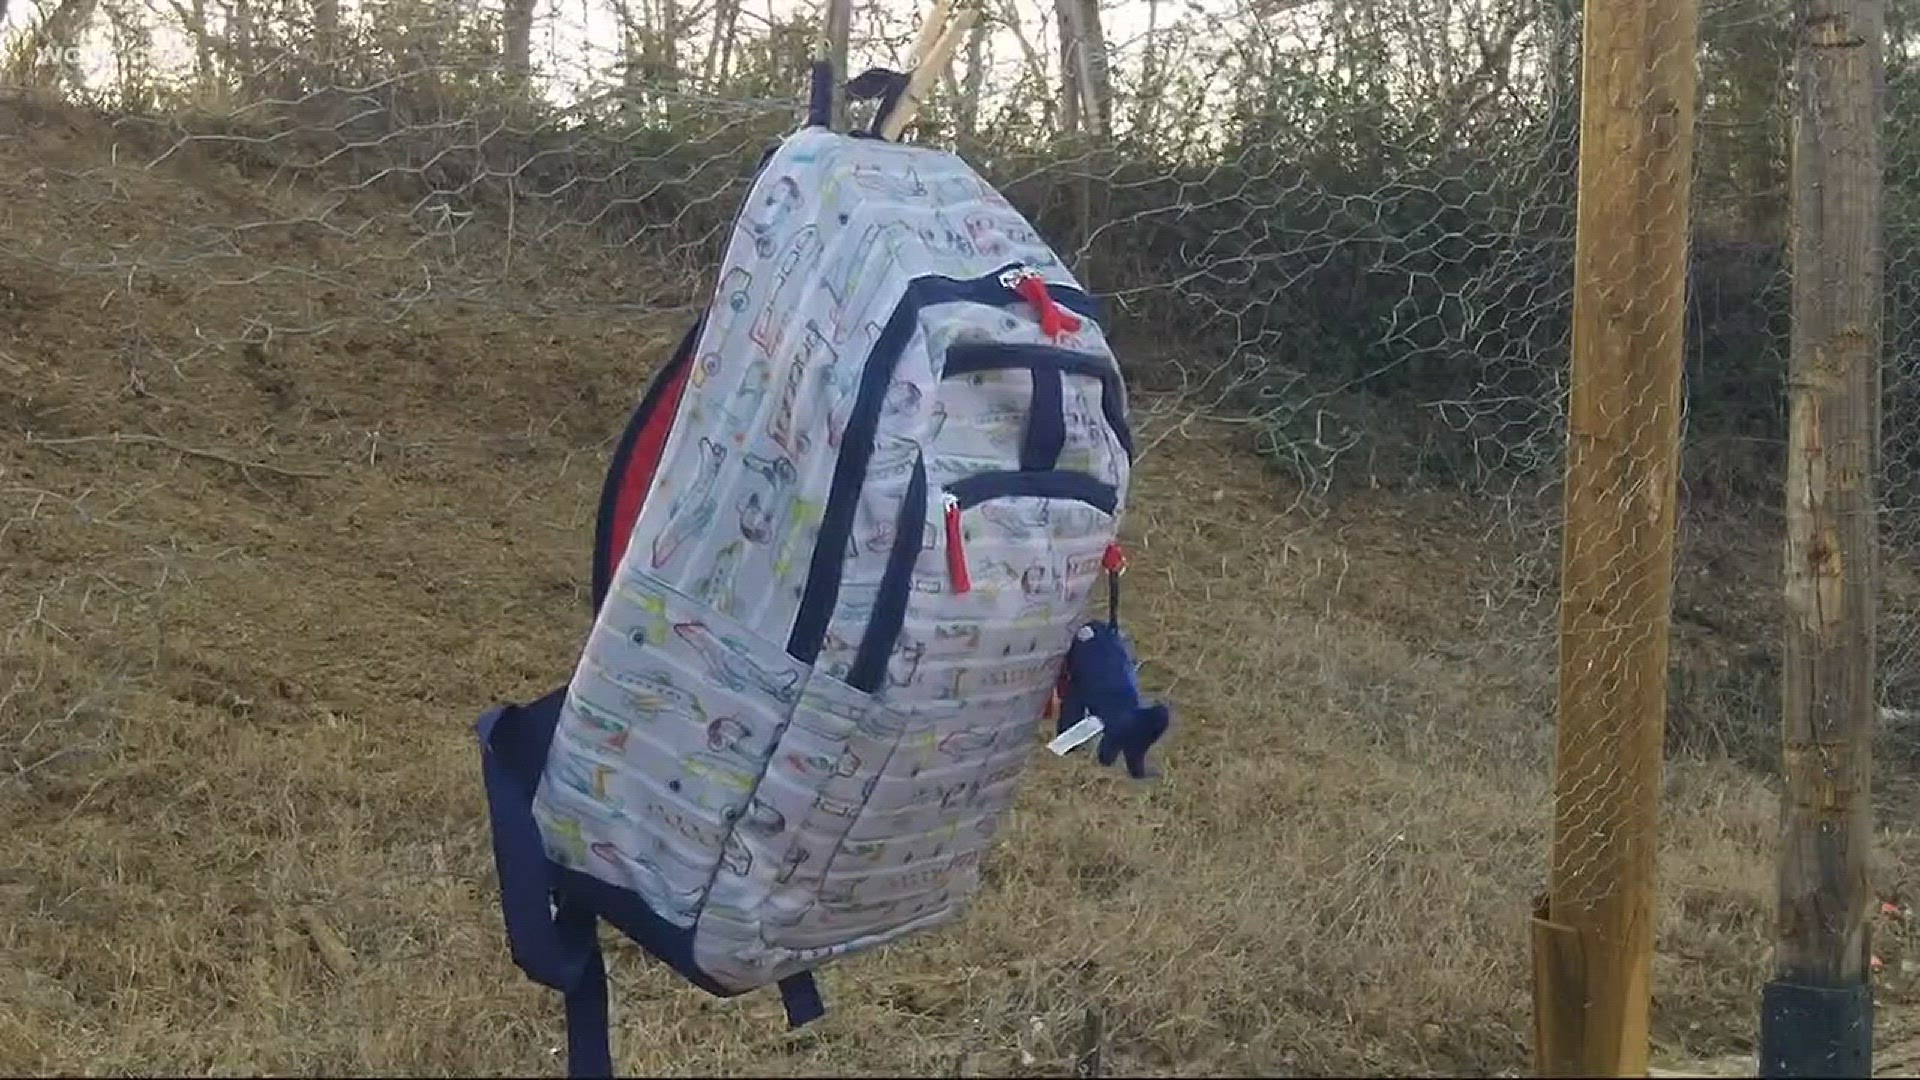 Parents turning to bulletproof backpacks